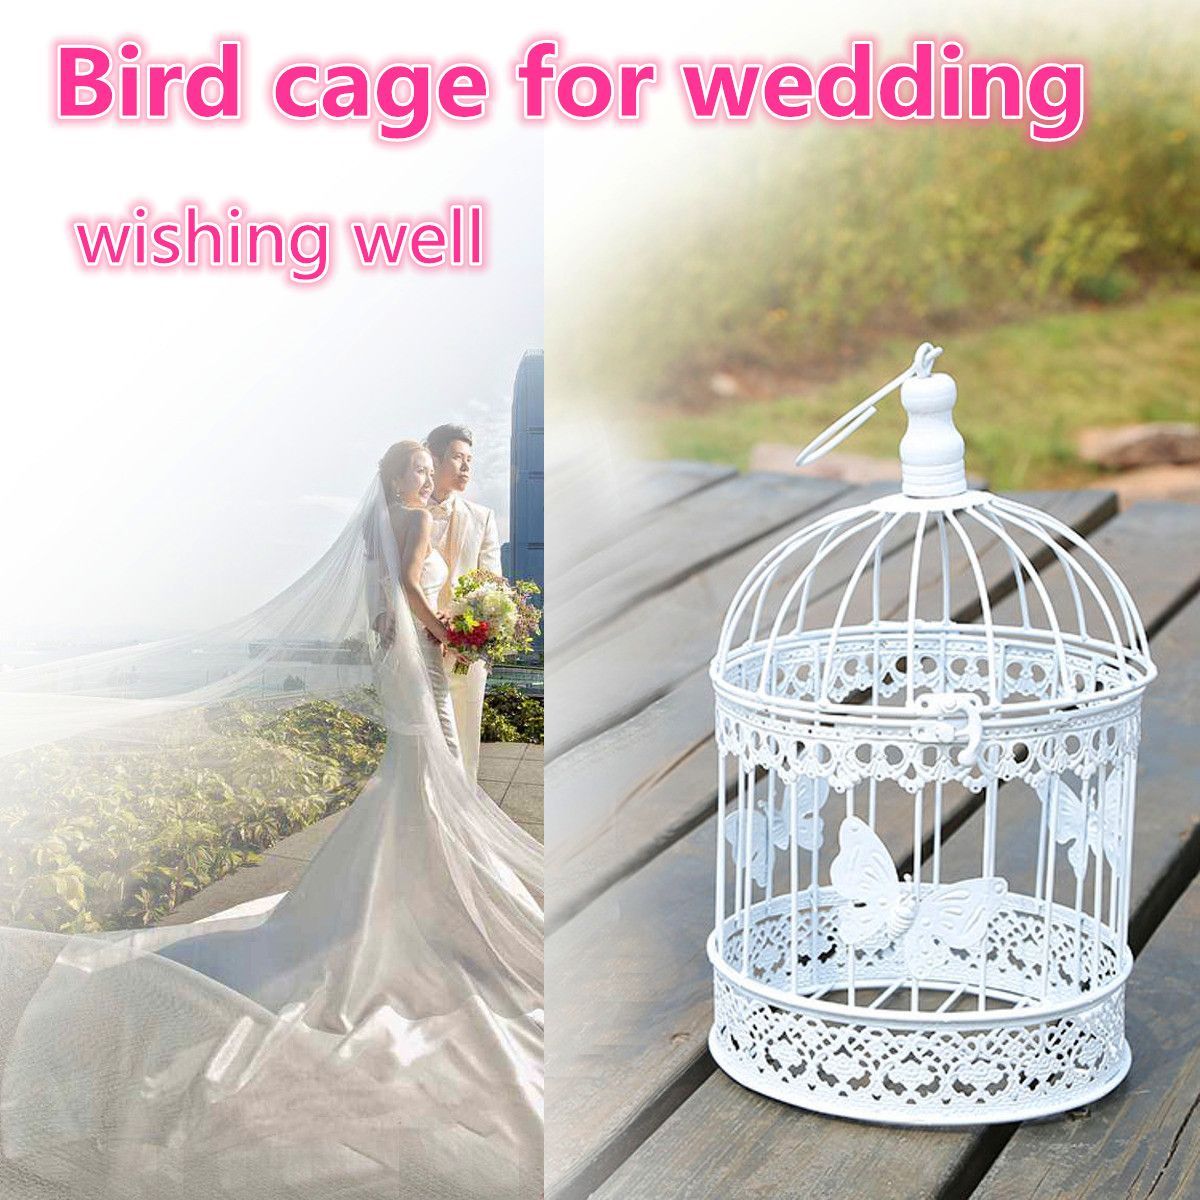 Birdcage-Wishing-Bird-Cage-Well-Wedding-White-Birdcage-Cards-Box-Gift-Decorations-1542526